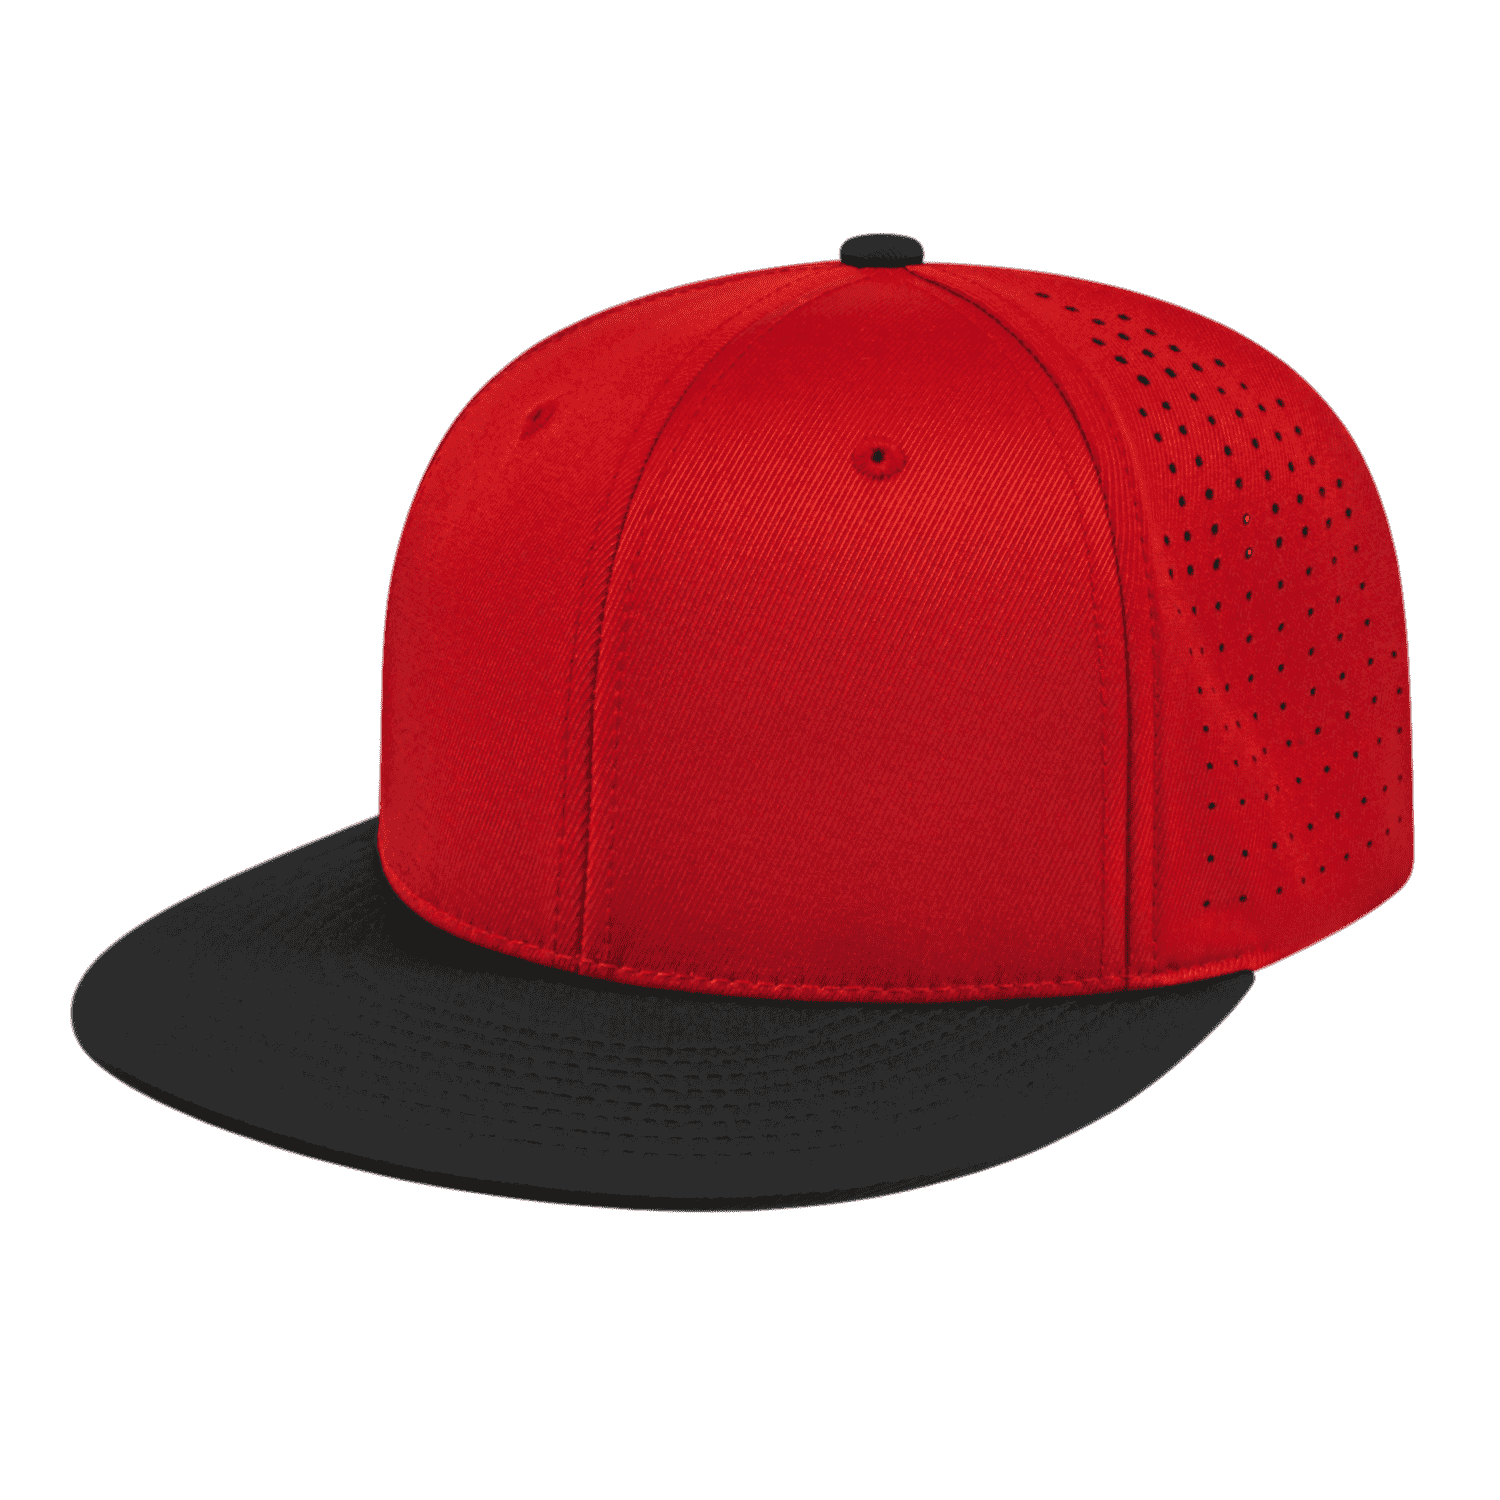 Cap America i8503 Flexfit Perforated Performance Cap - Red Black